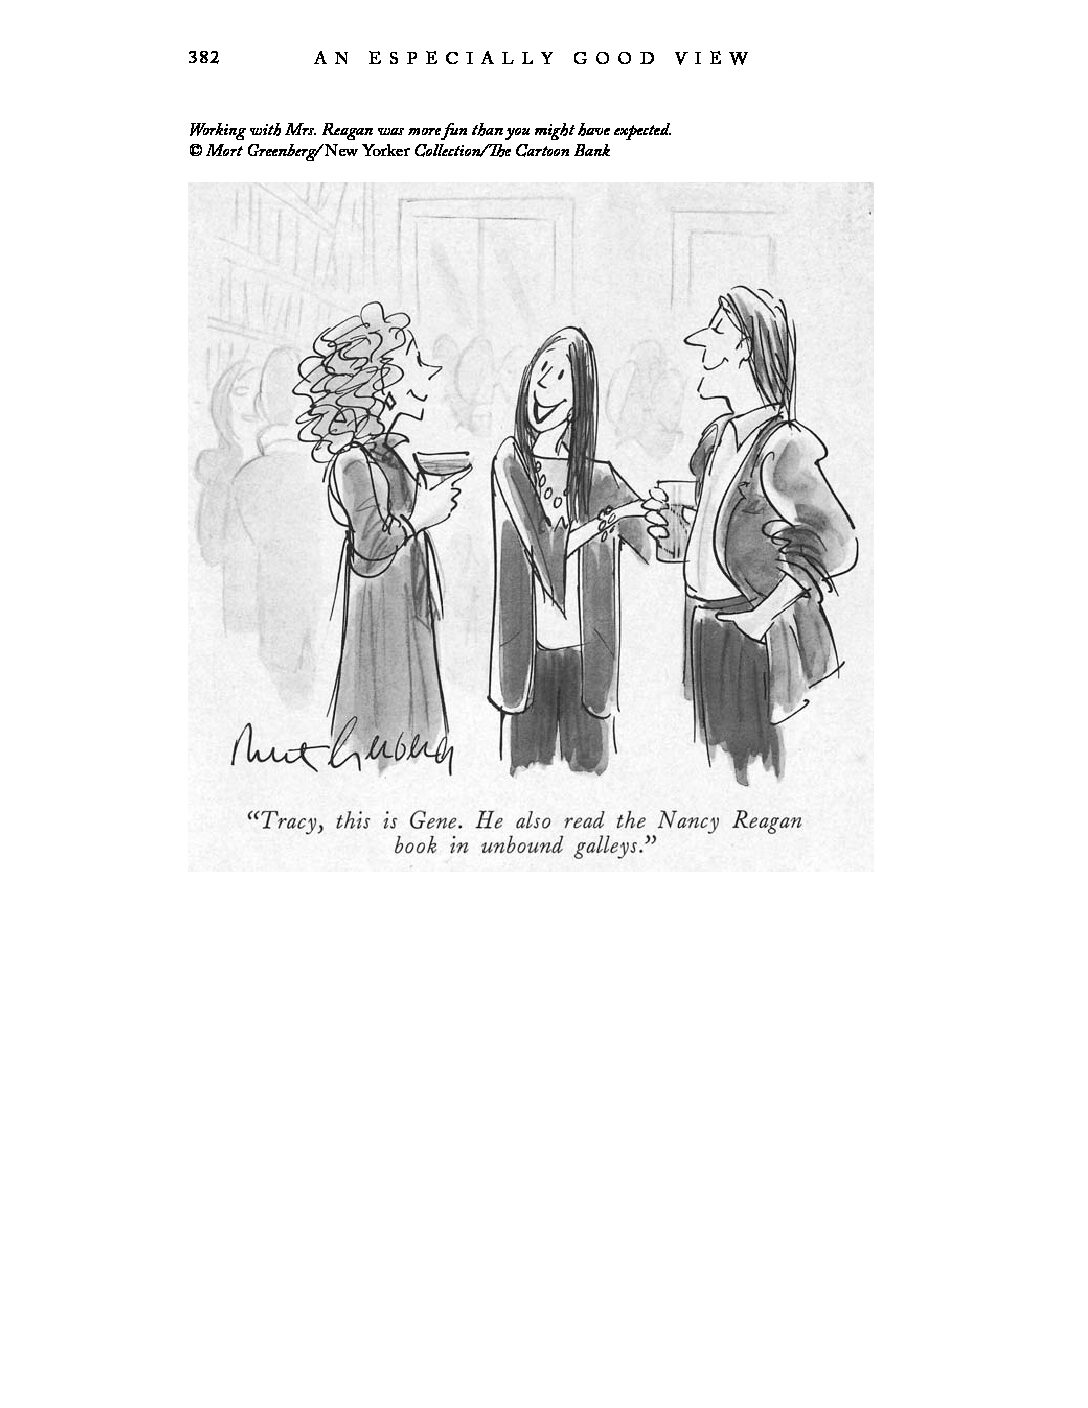 The New Yorker Cartoon